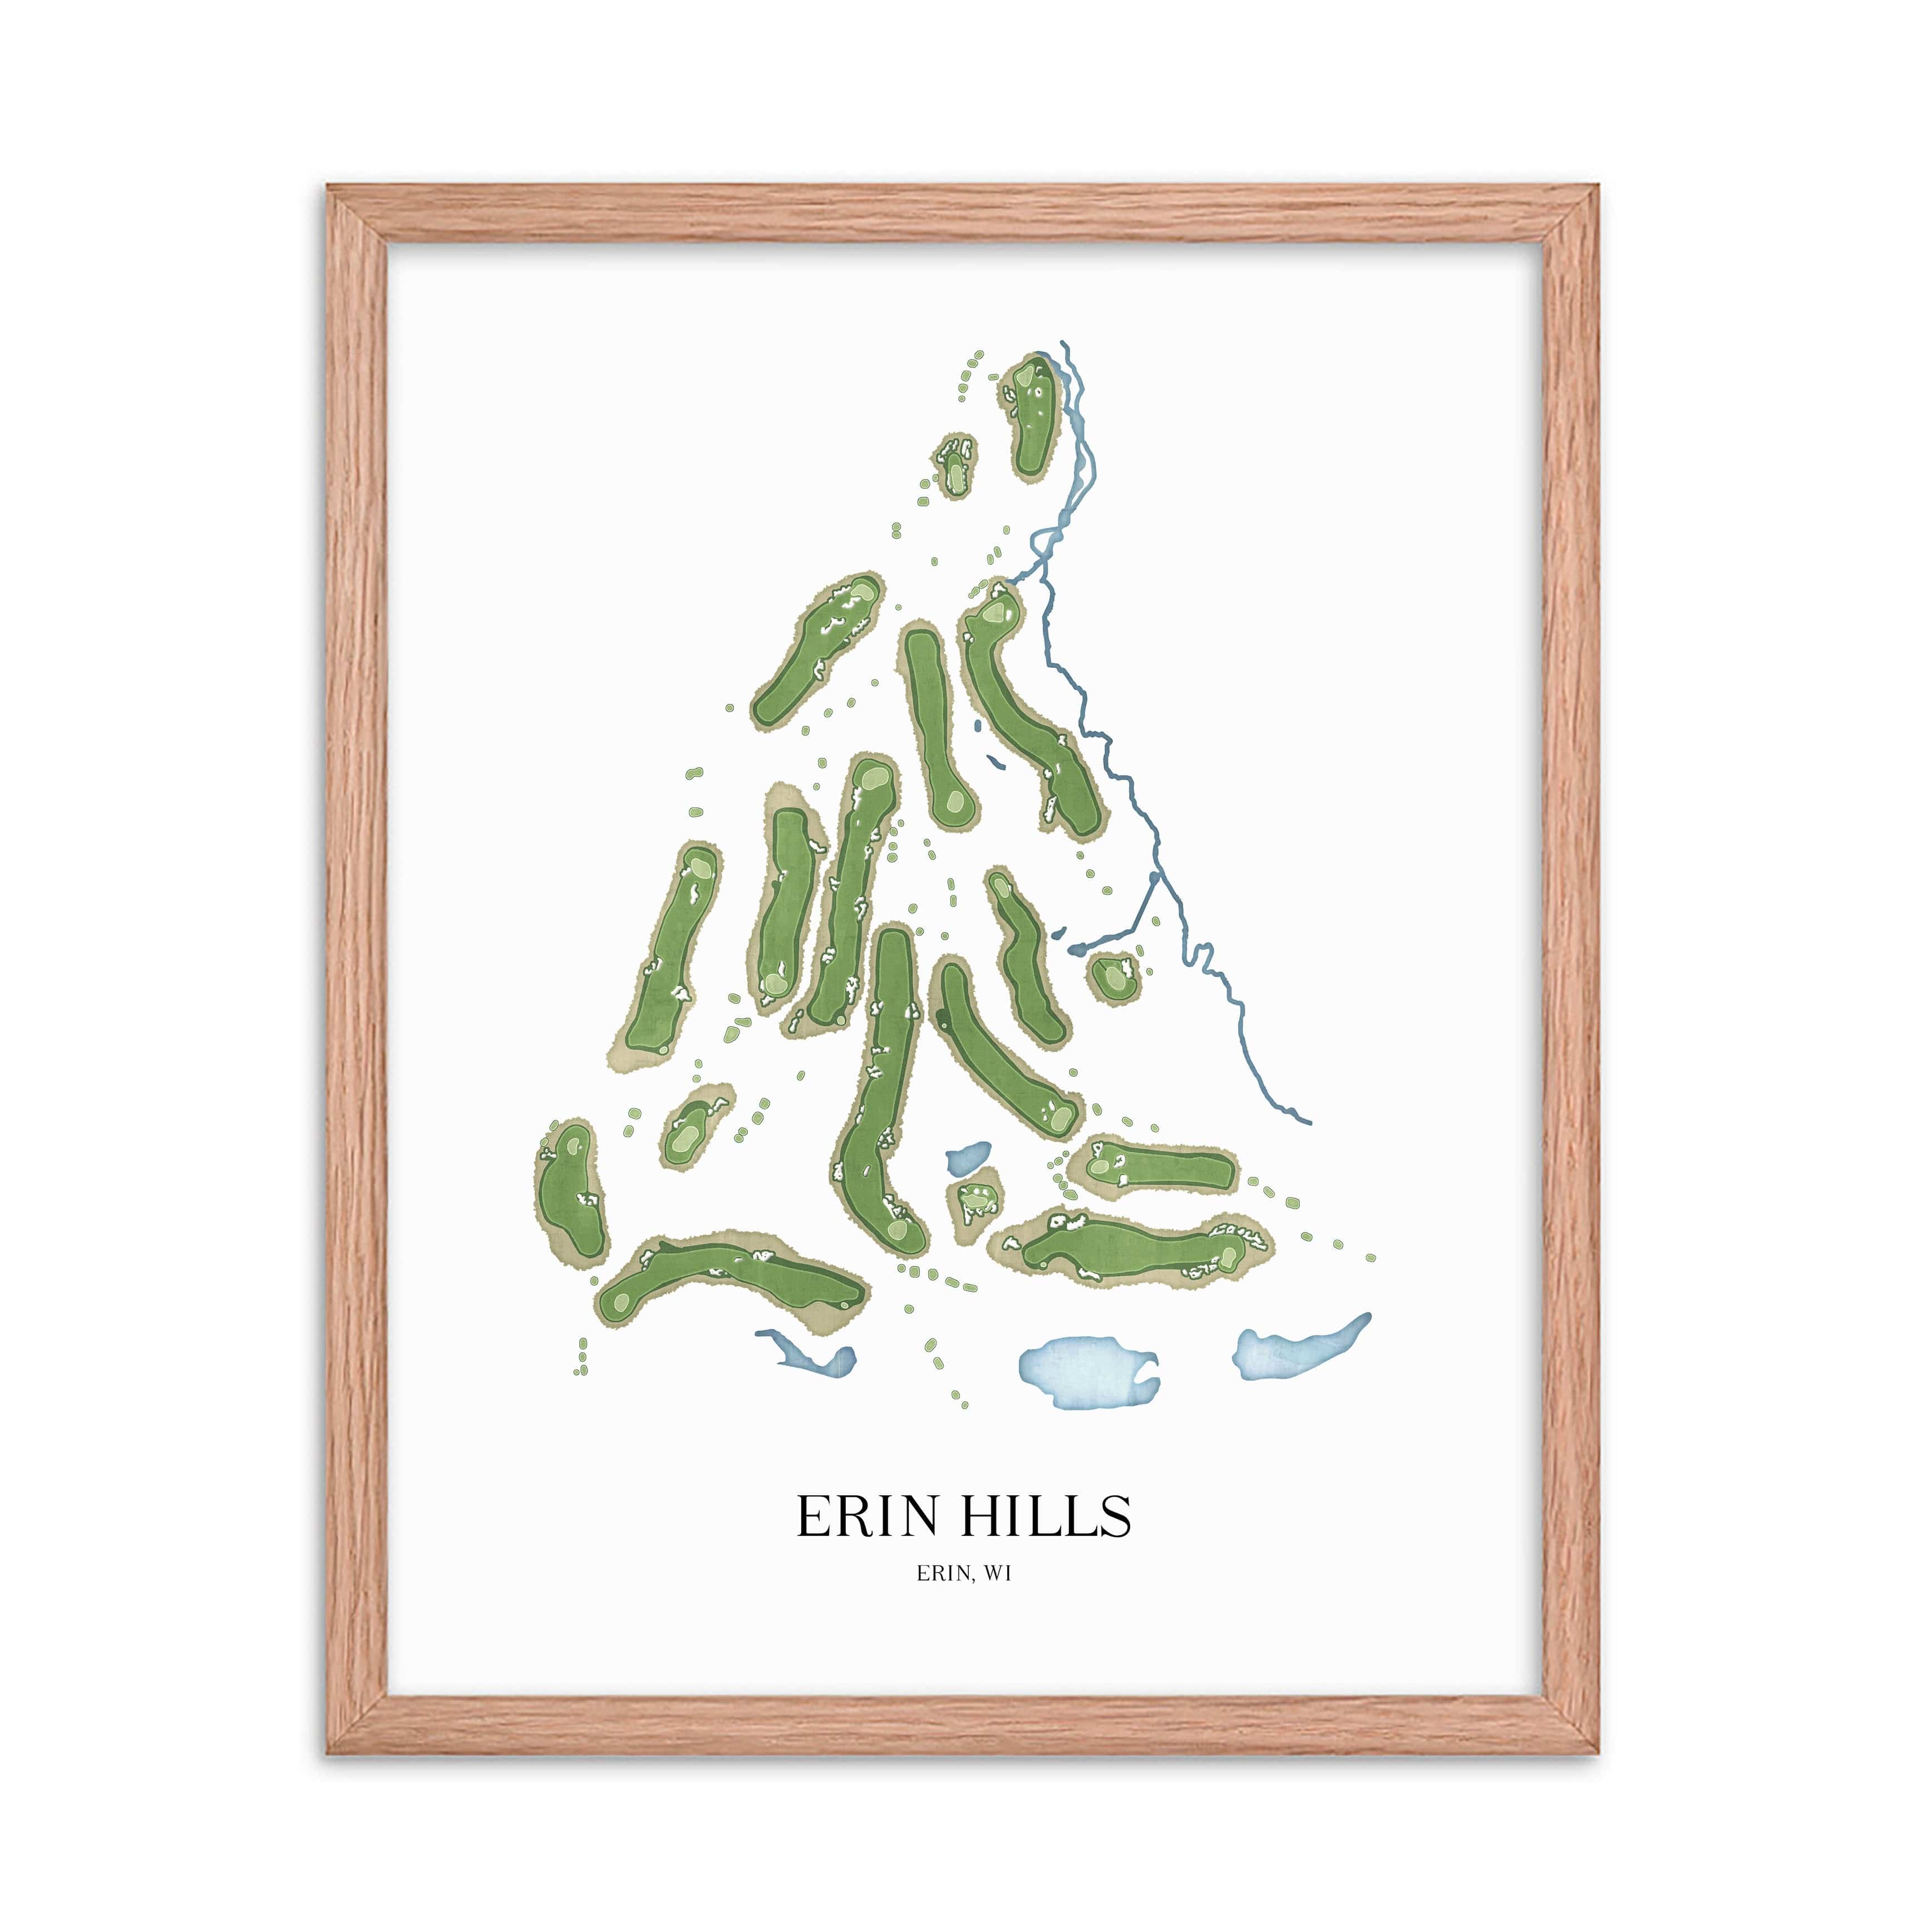 The 19th Hole Golf Shop - Golf Course Prints -  8" x 10" / Oak Erin Hills Golf Course Map